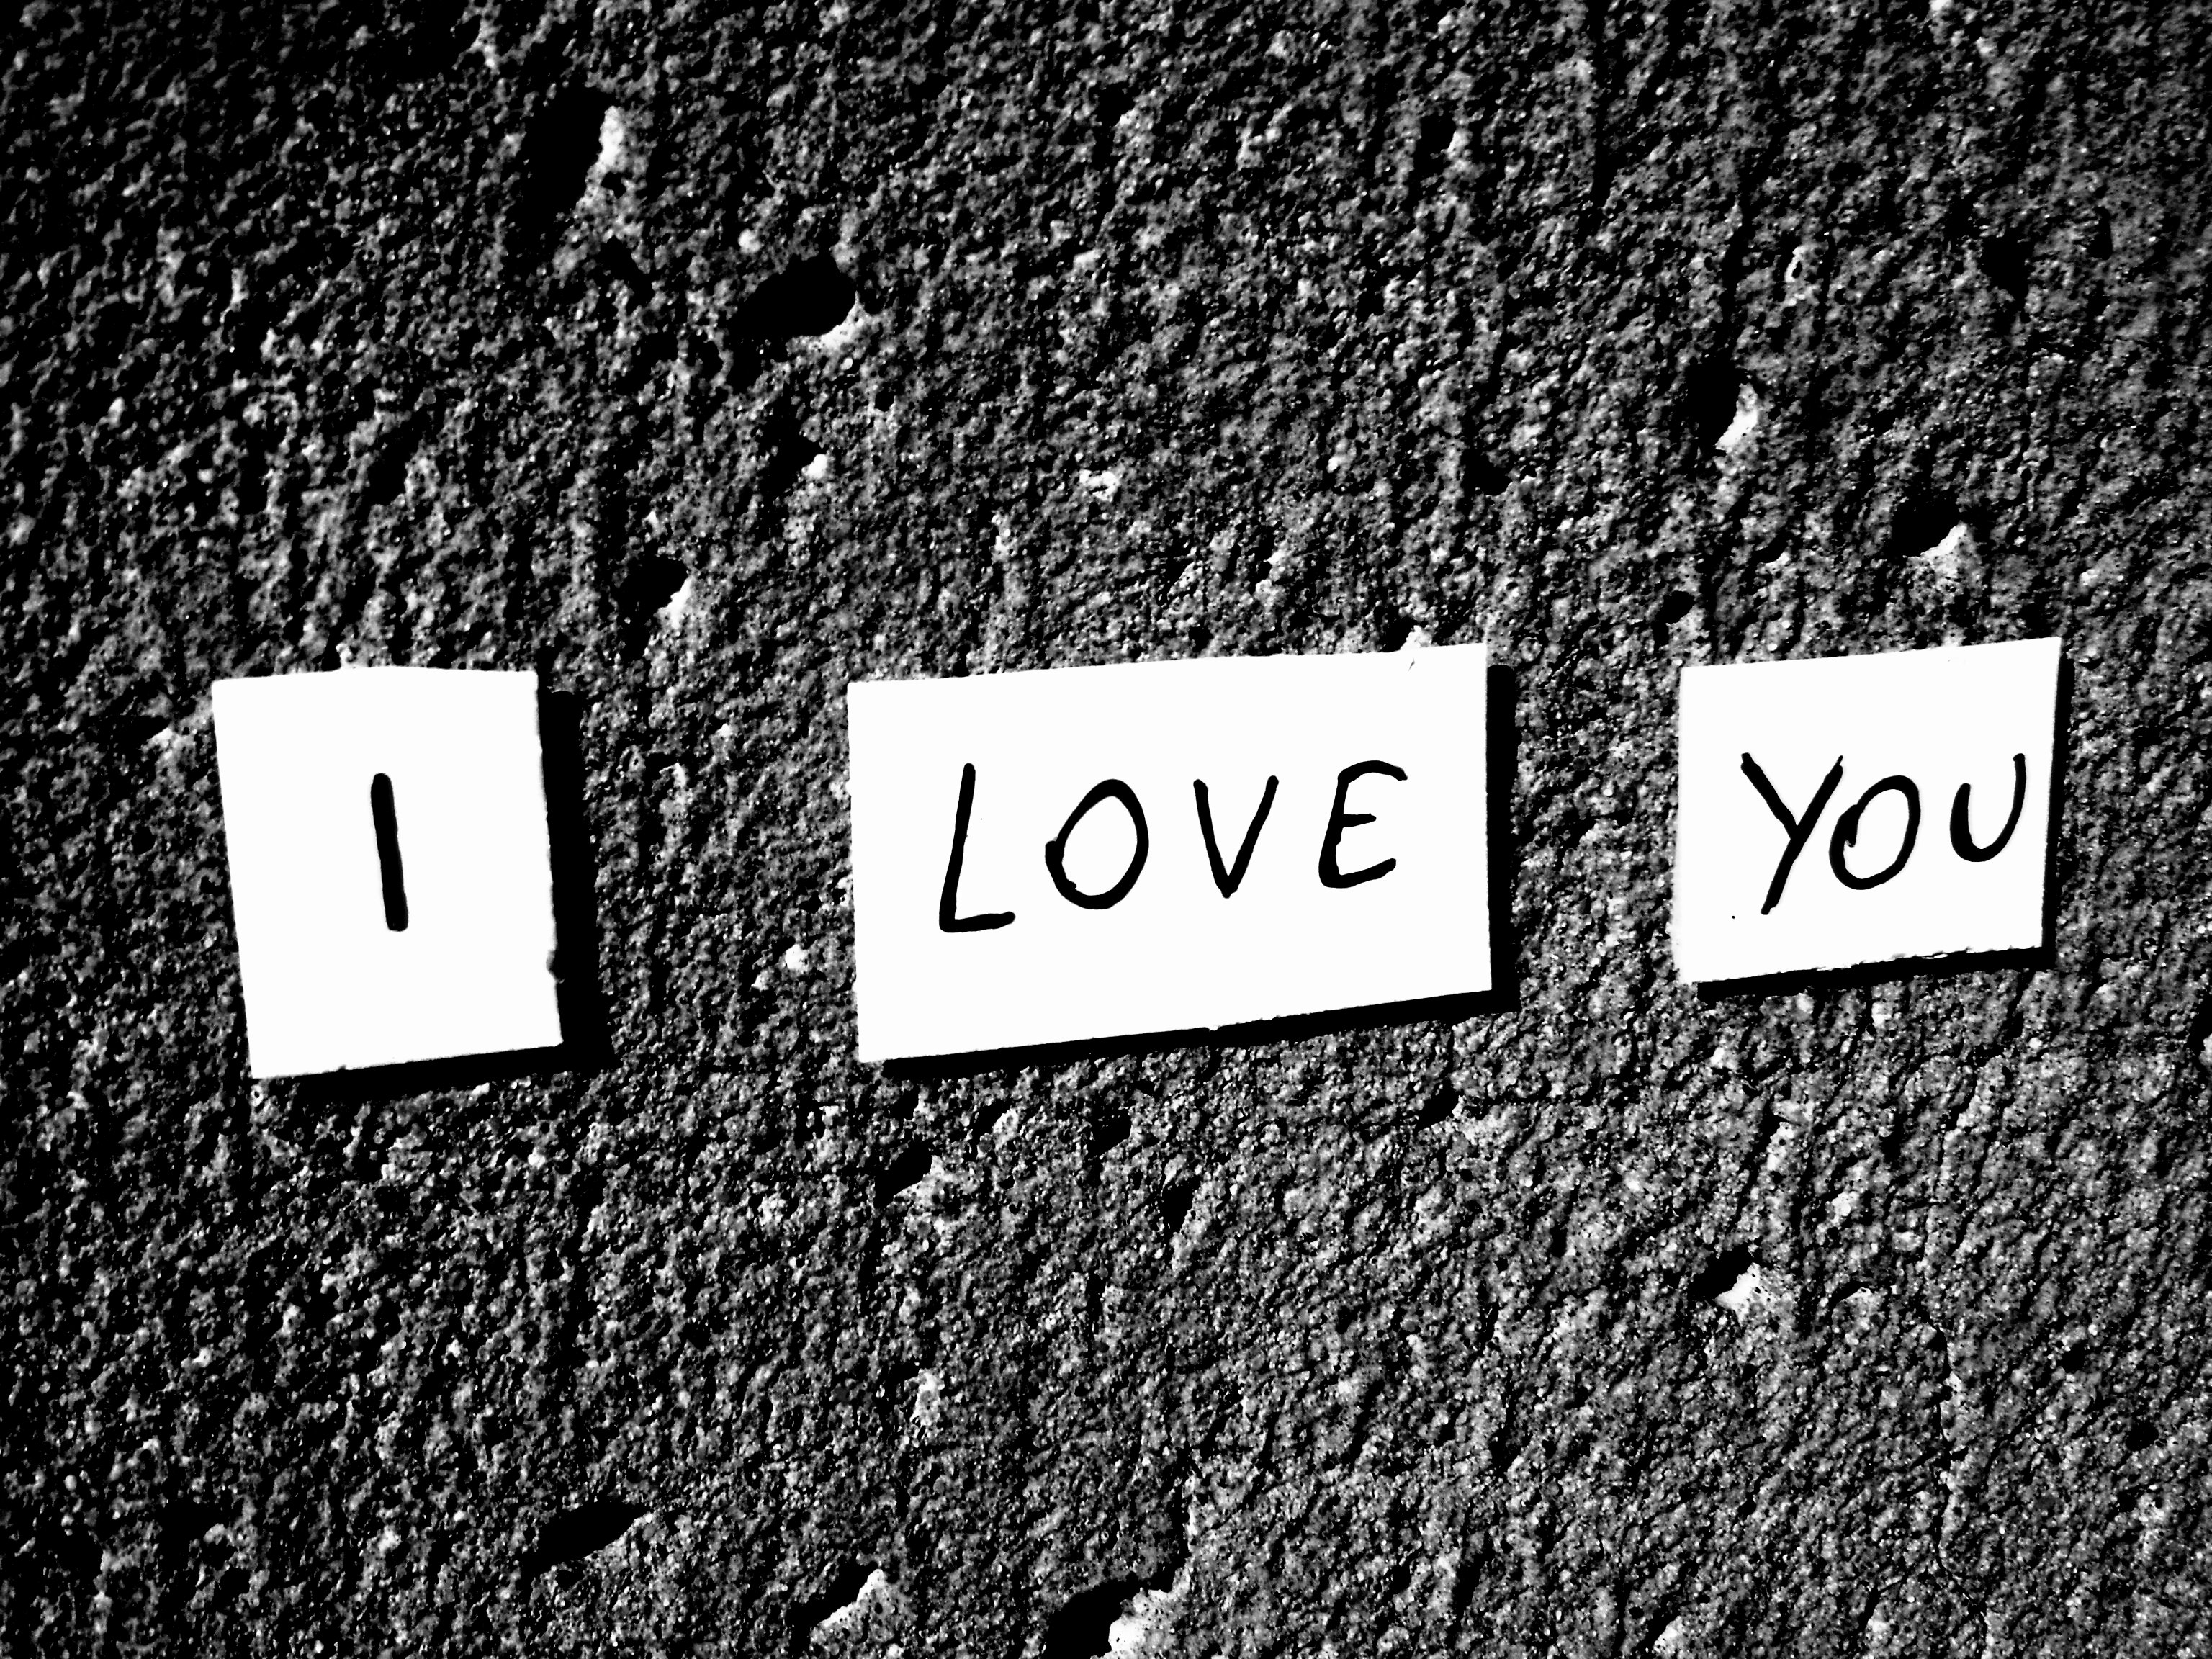 I love you hoe 9lives. Обои на телефон i Love you. Love картинки надписи. Обои с надписью i Love you. Картинки на рабочий стол со словами.